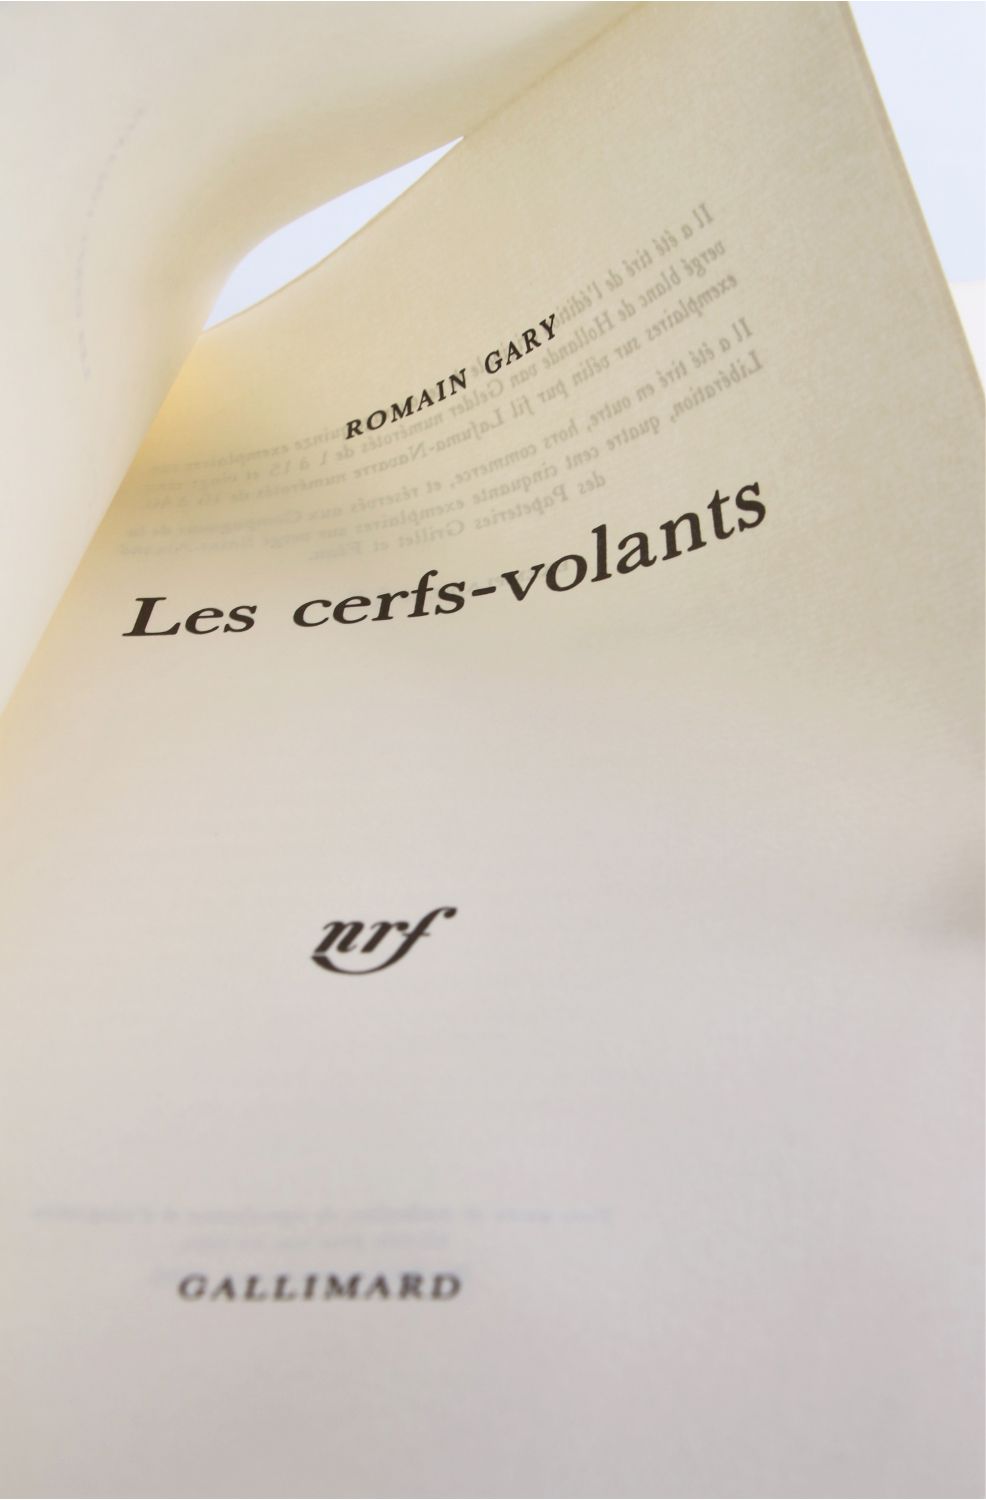 Les Cerfs Volants (French Edition) - Gary, Romain: 9780785926450